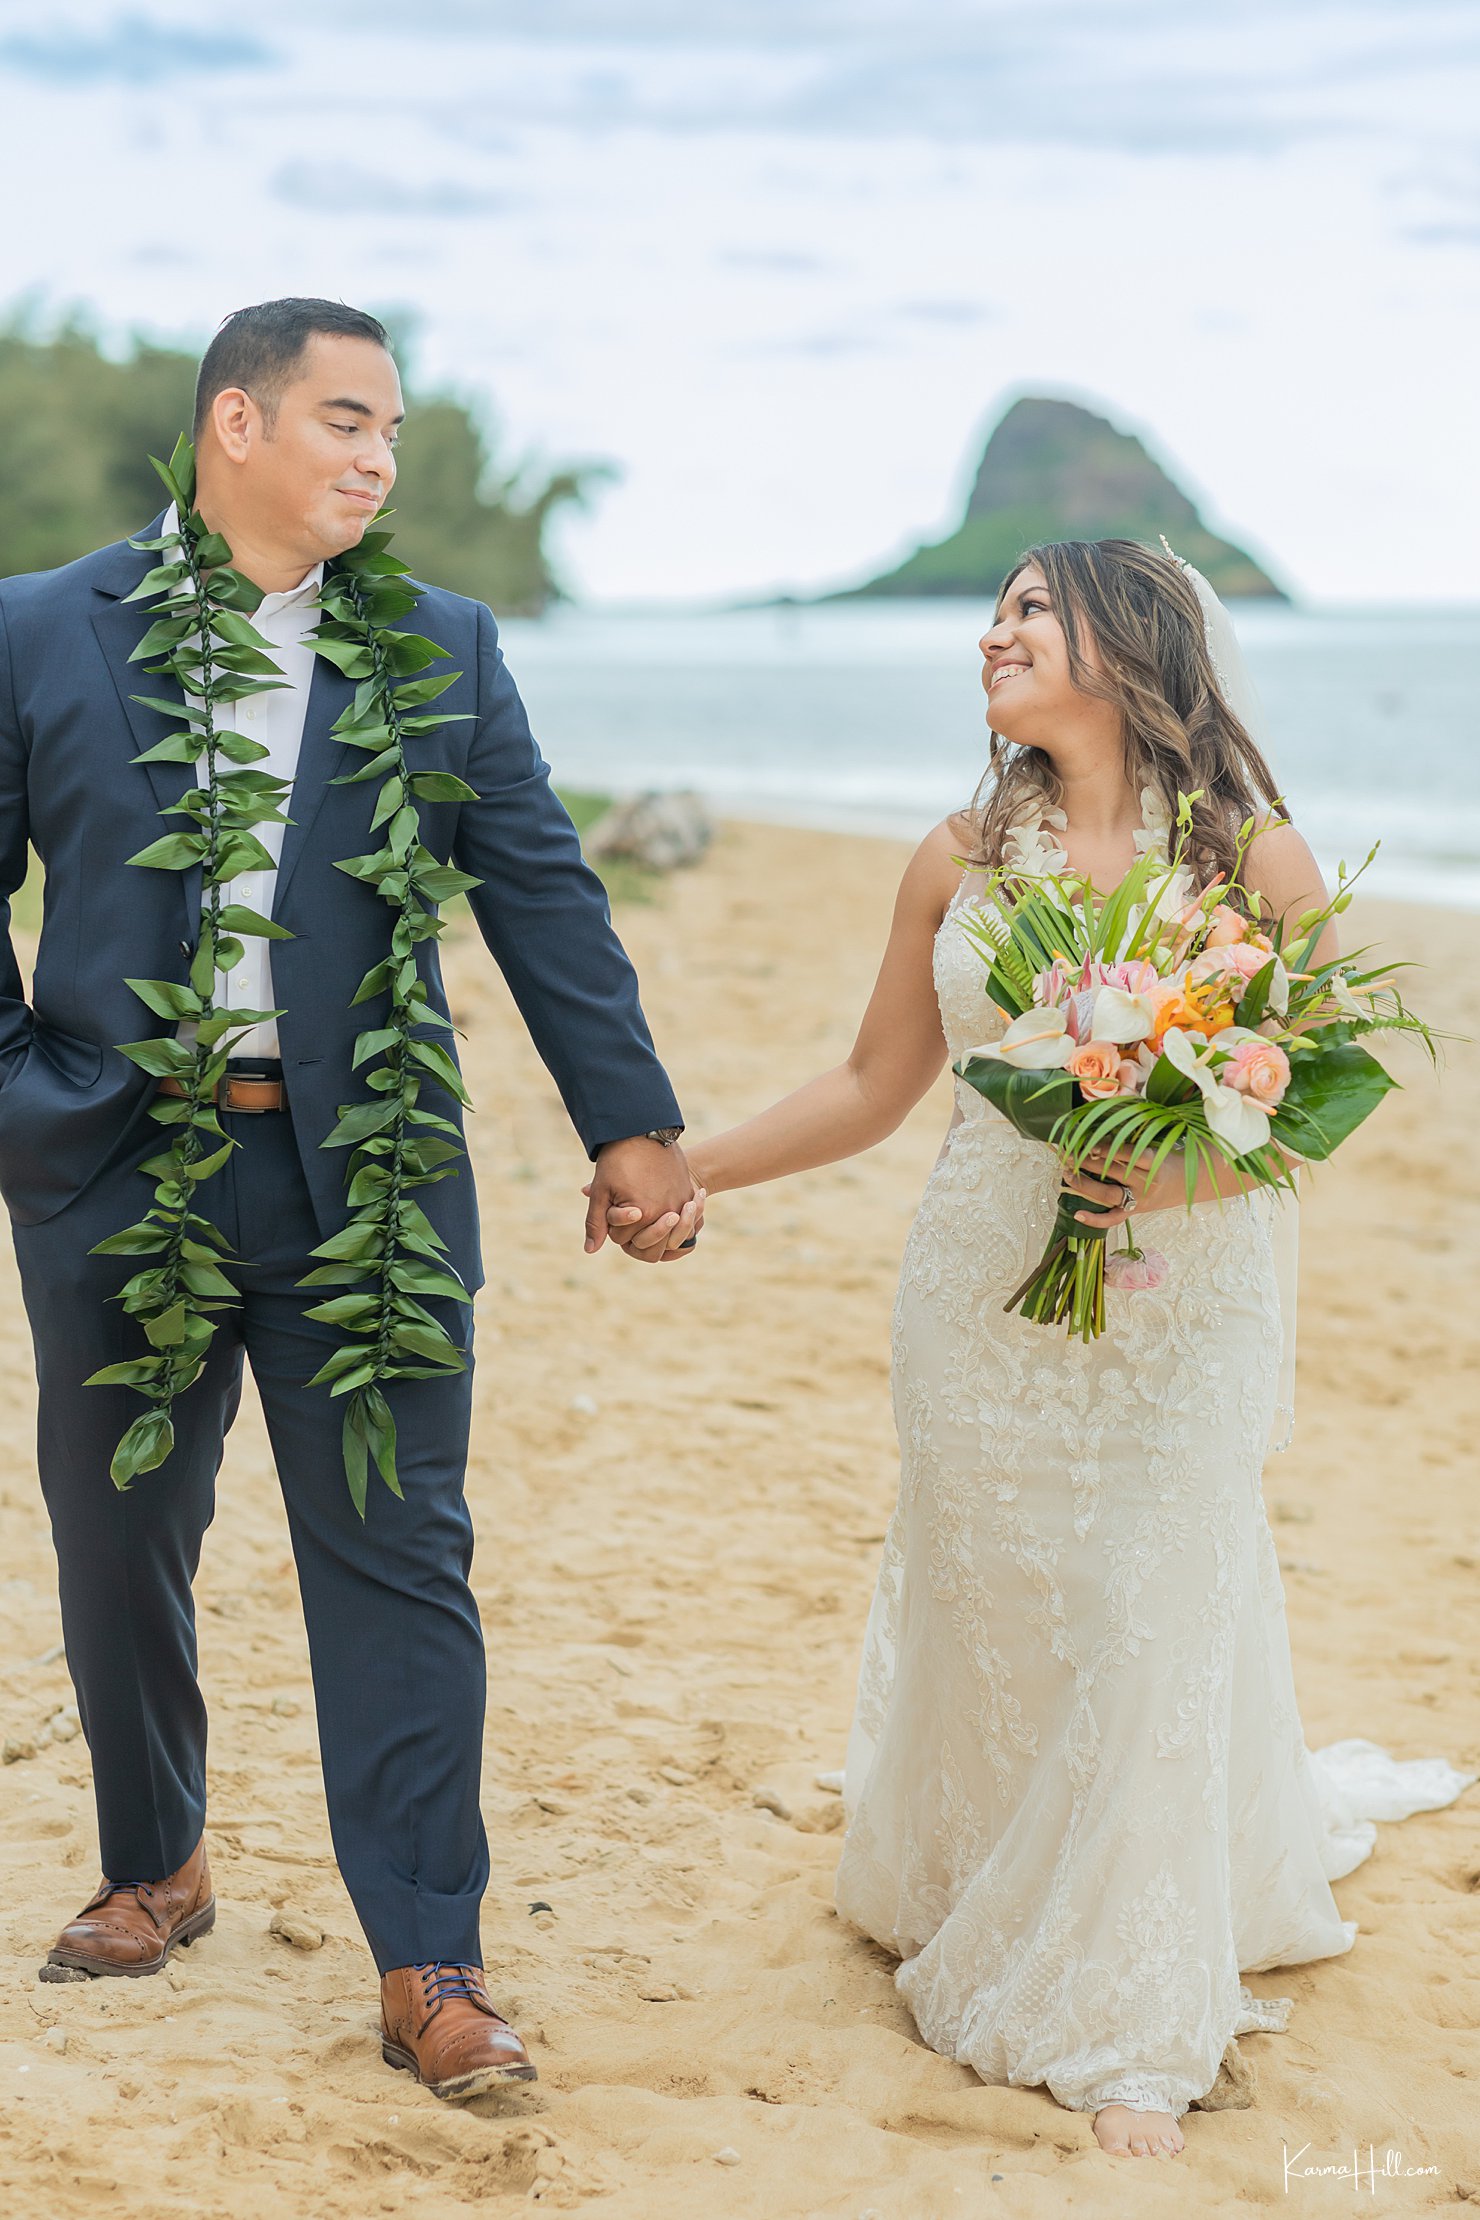 Hawaii marriage license Information